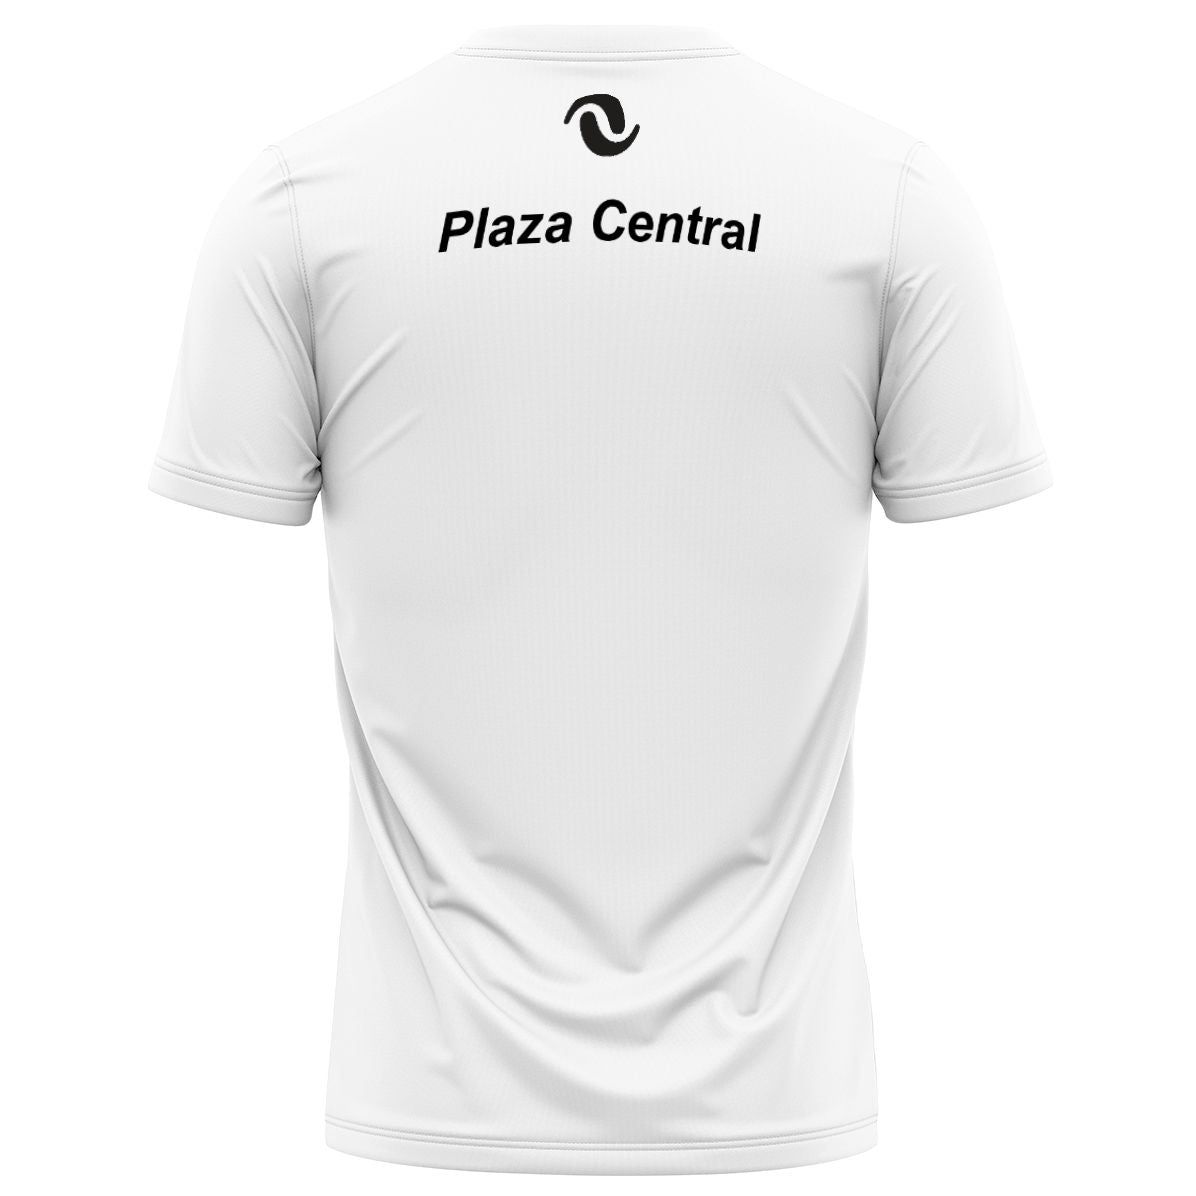 NV Plaza Central - Performance Shirt